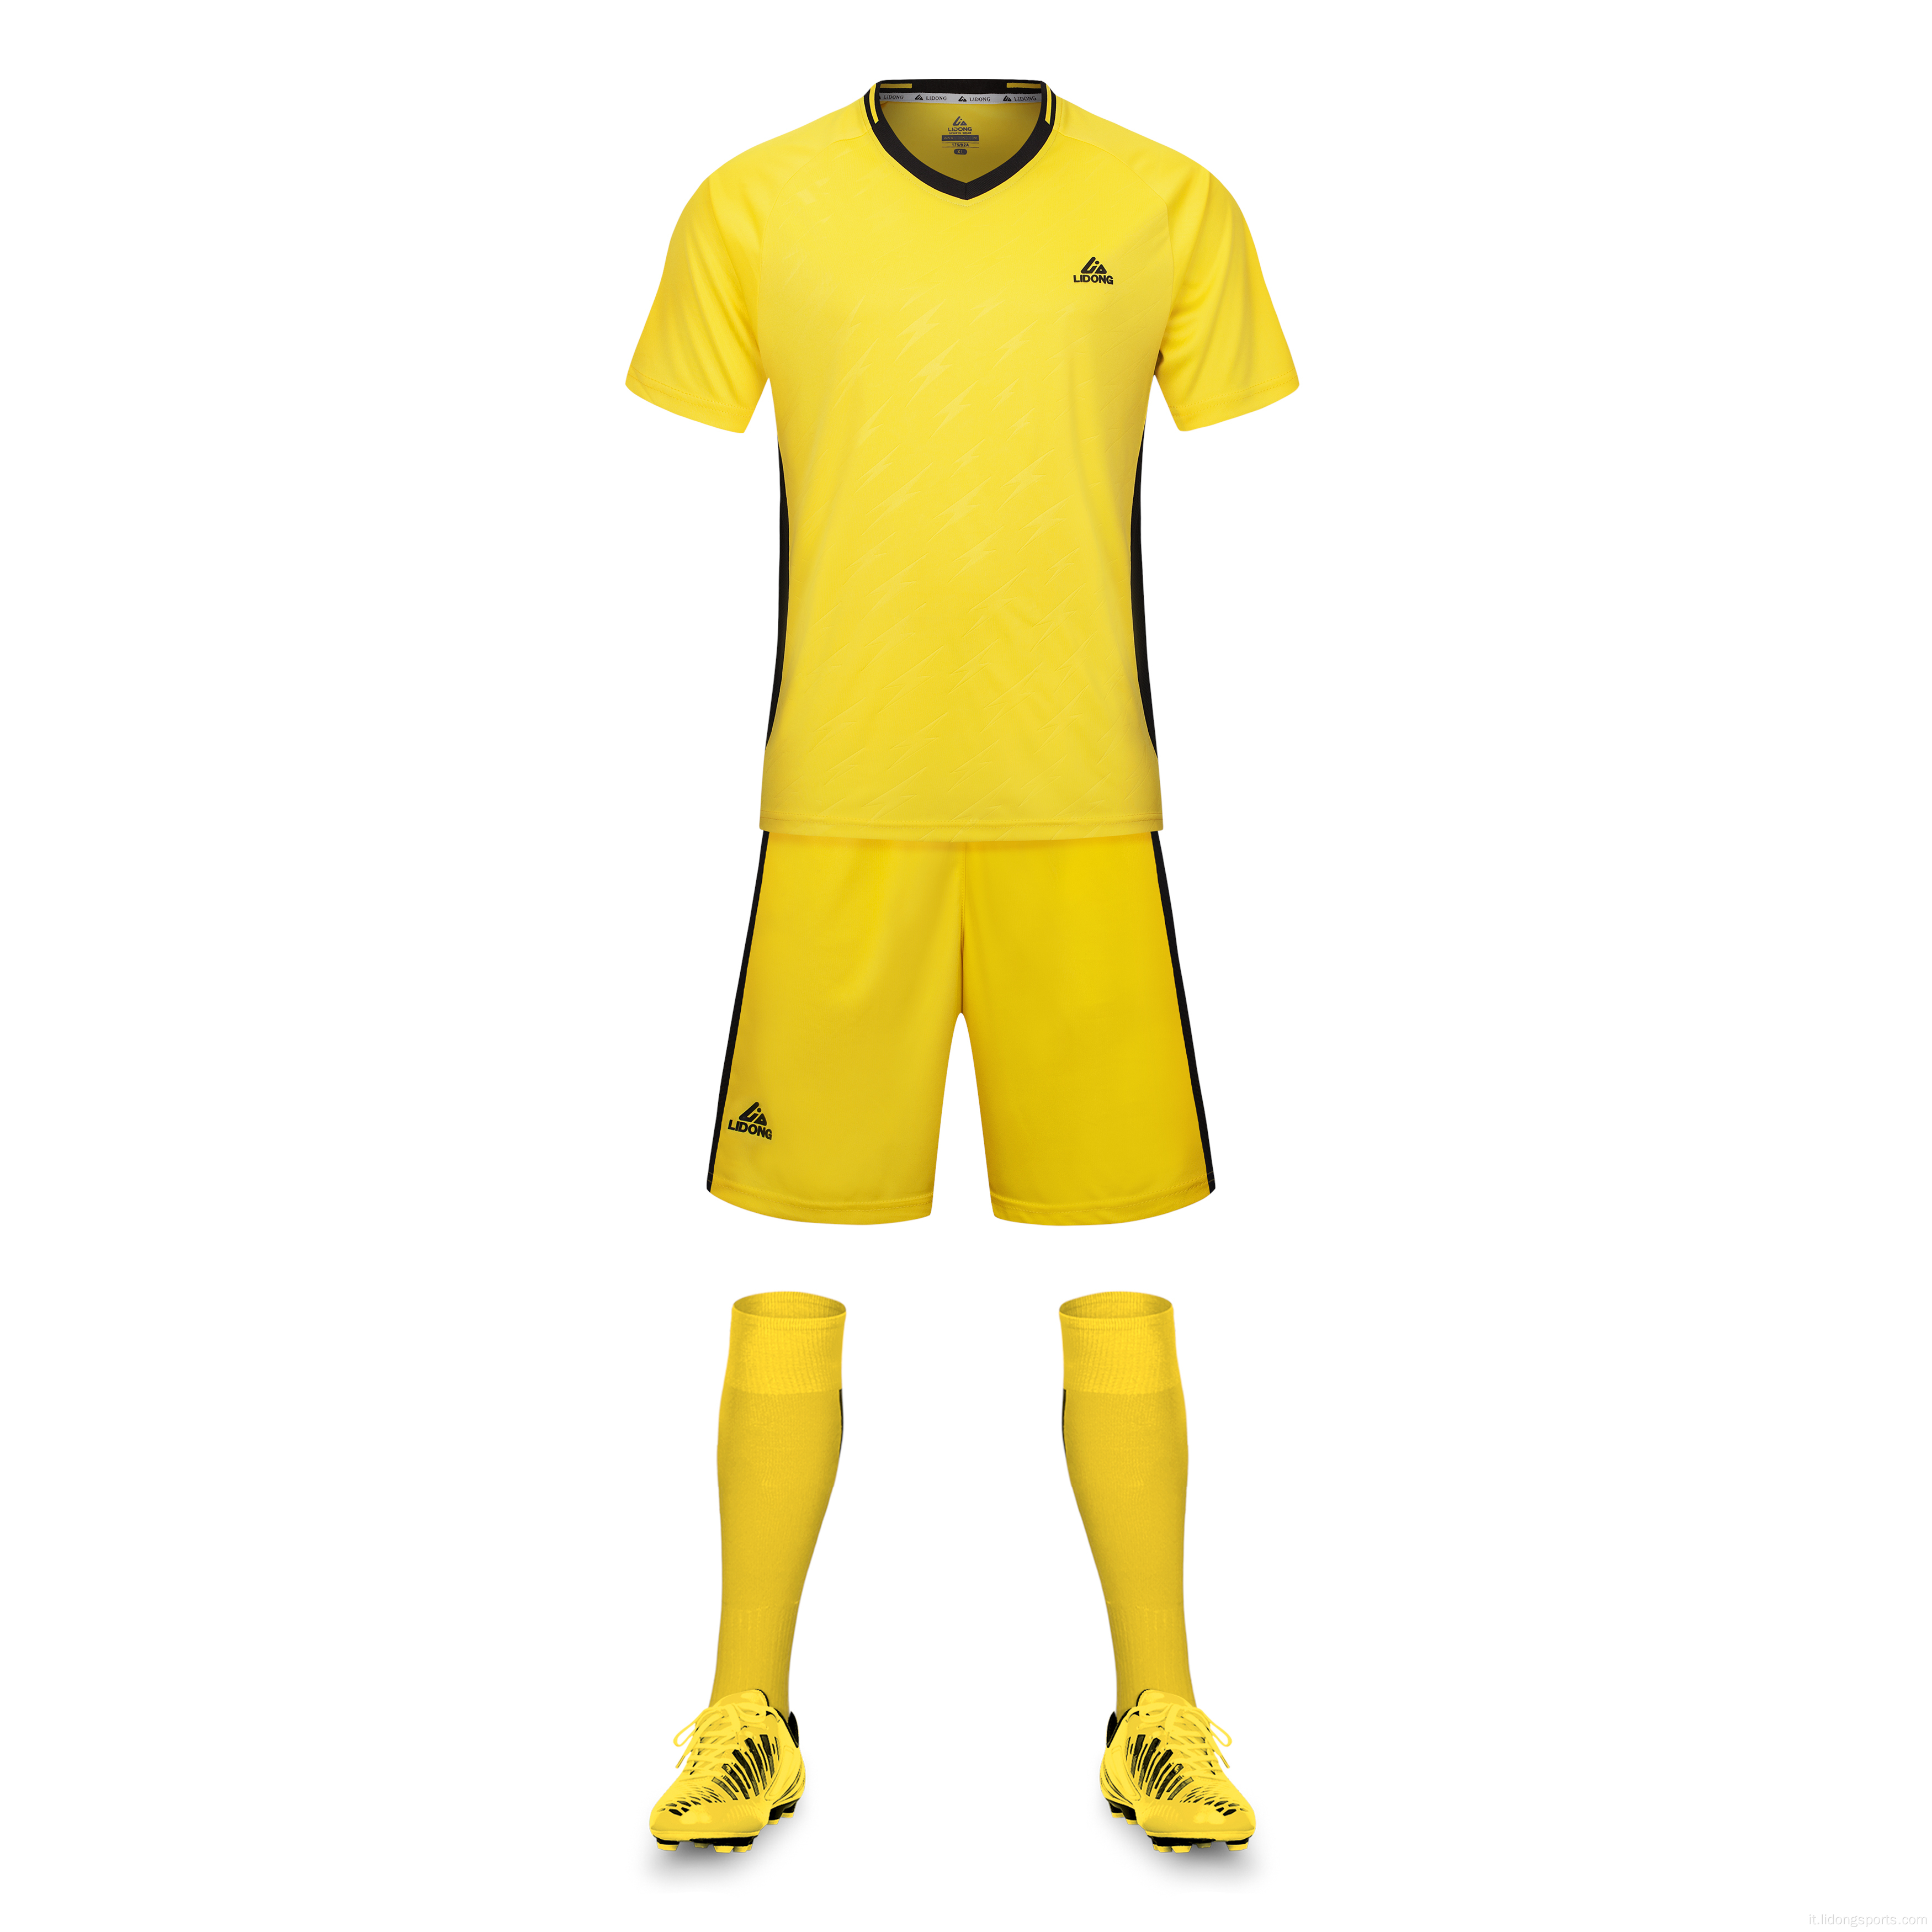 Camicia da calcio uniforme Maker Maker Soccer Jersey Design